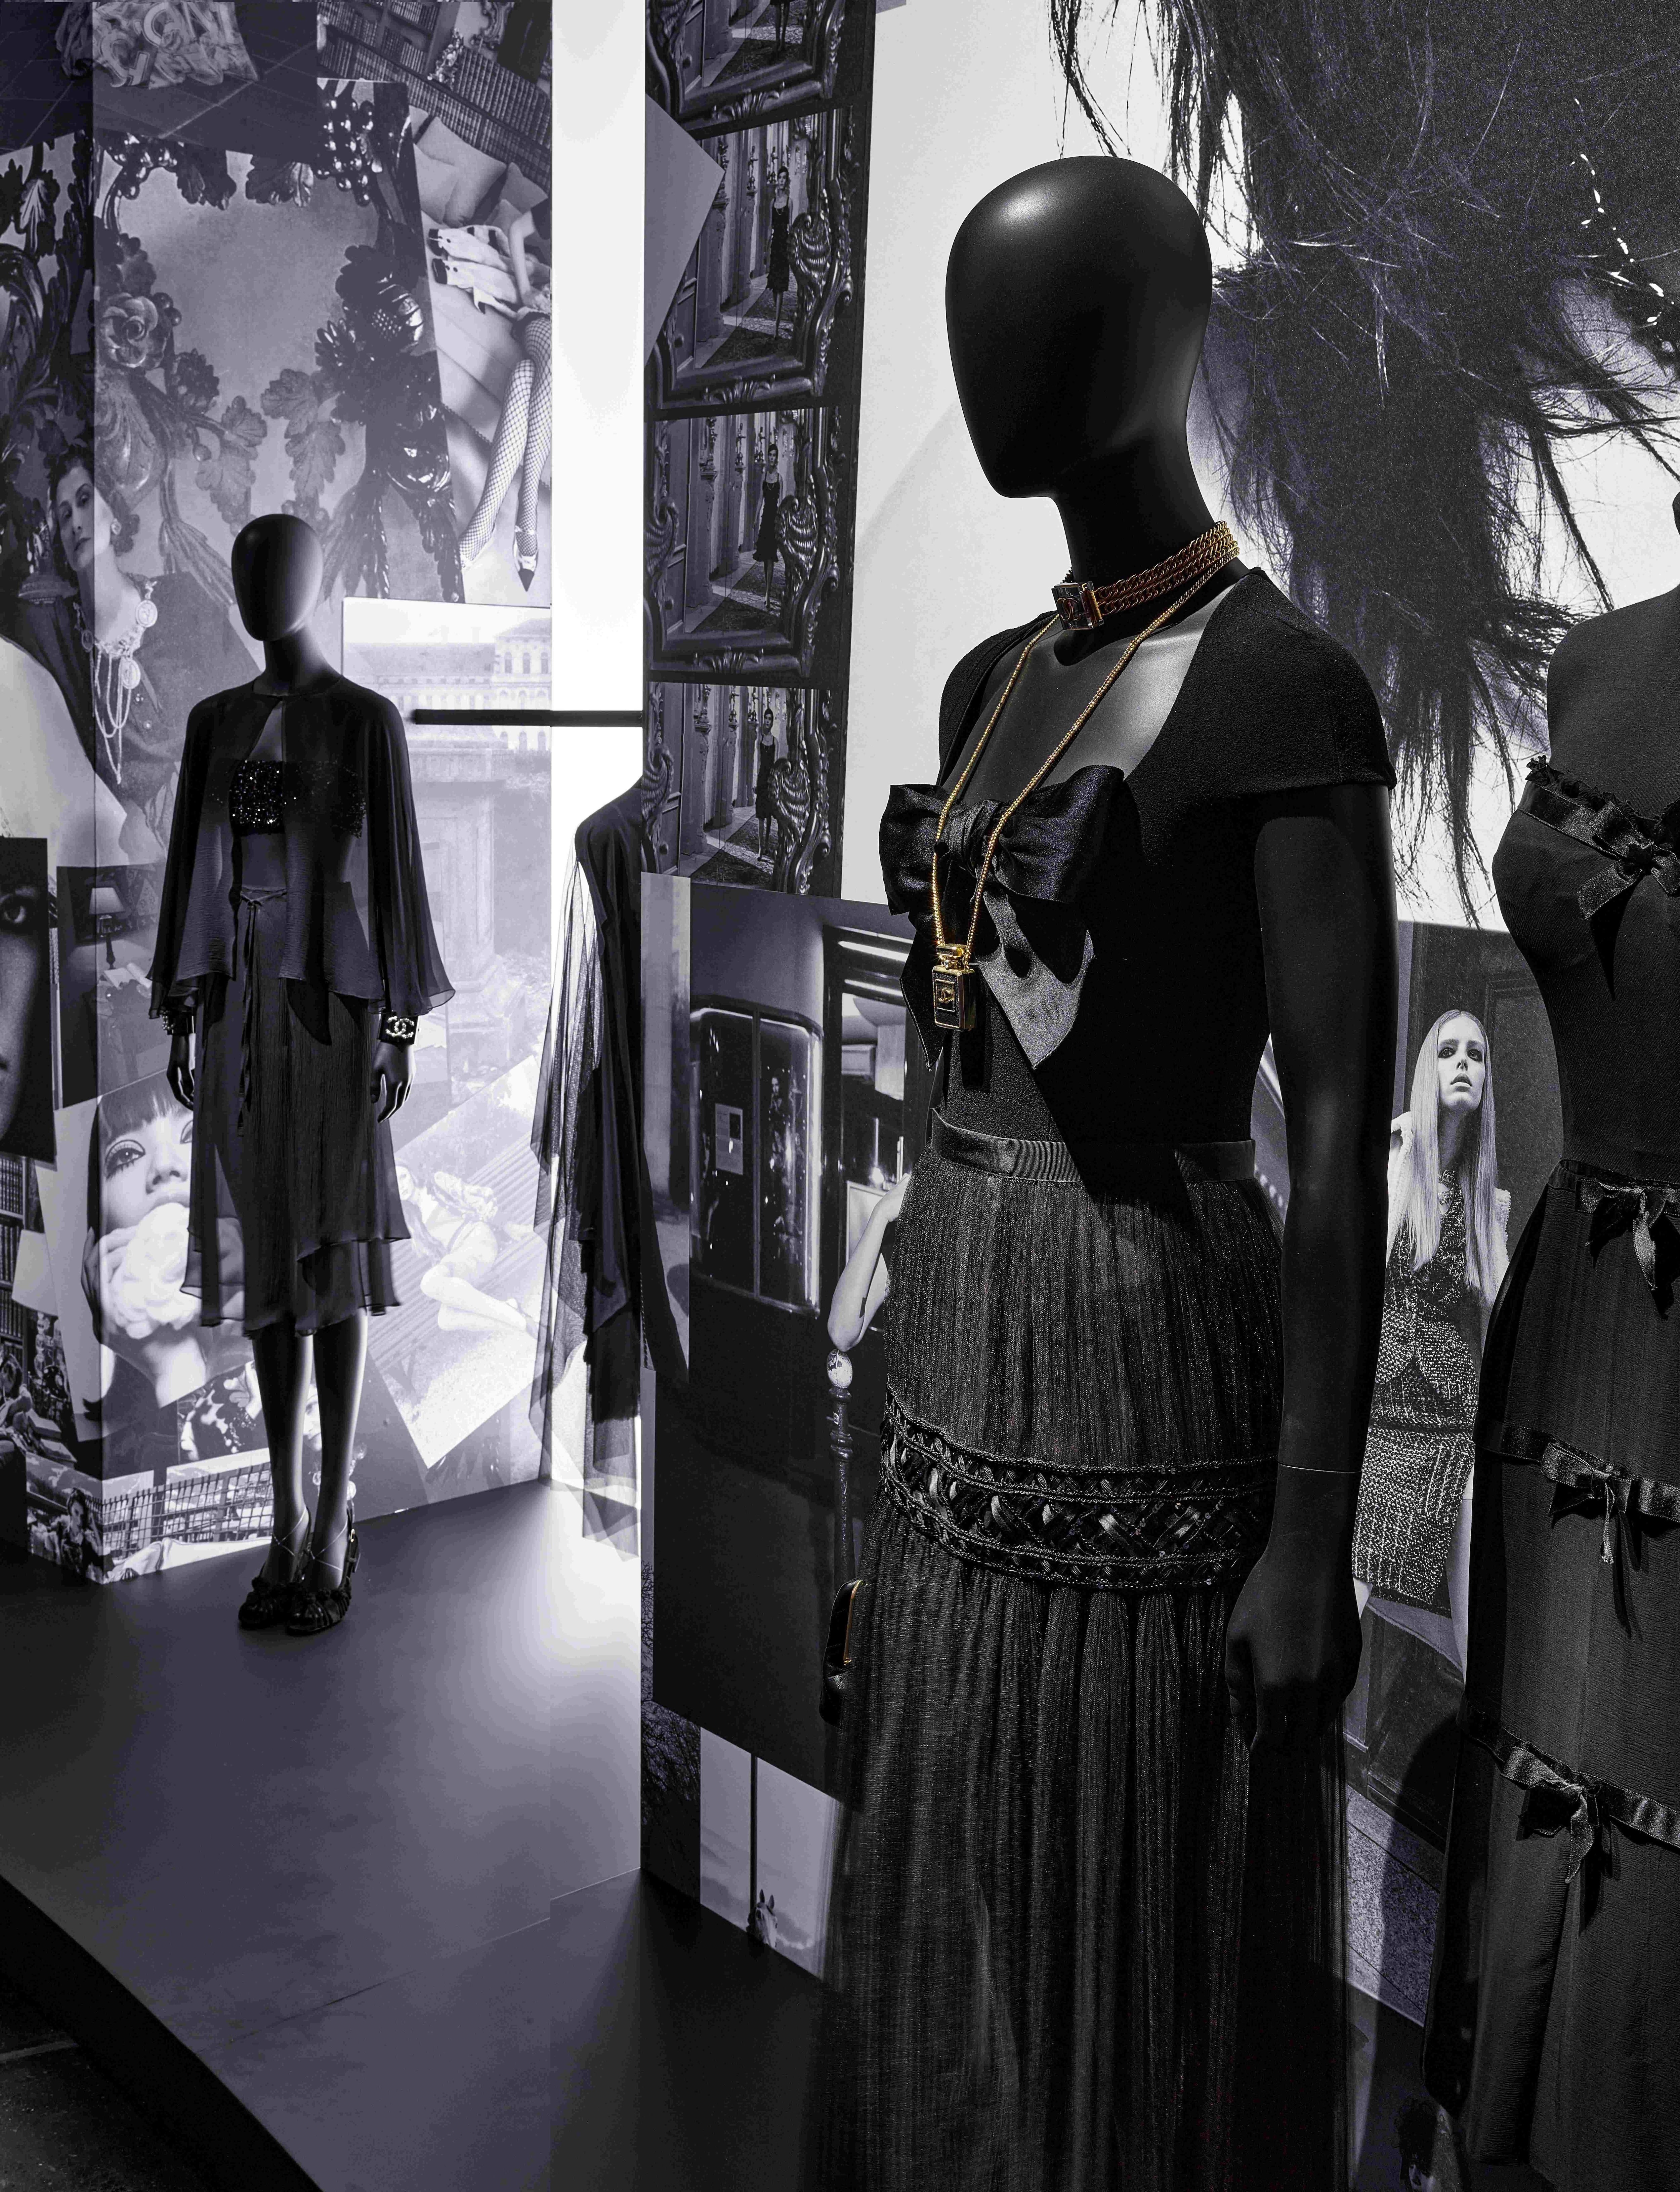 Chanel exhibition in Dubai celebrates the bond of its three designers